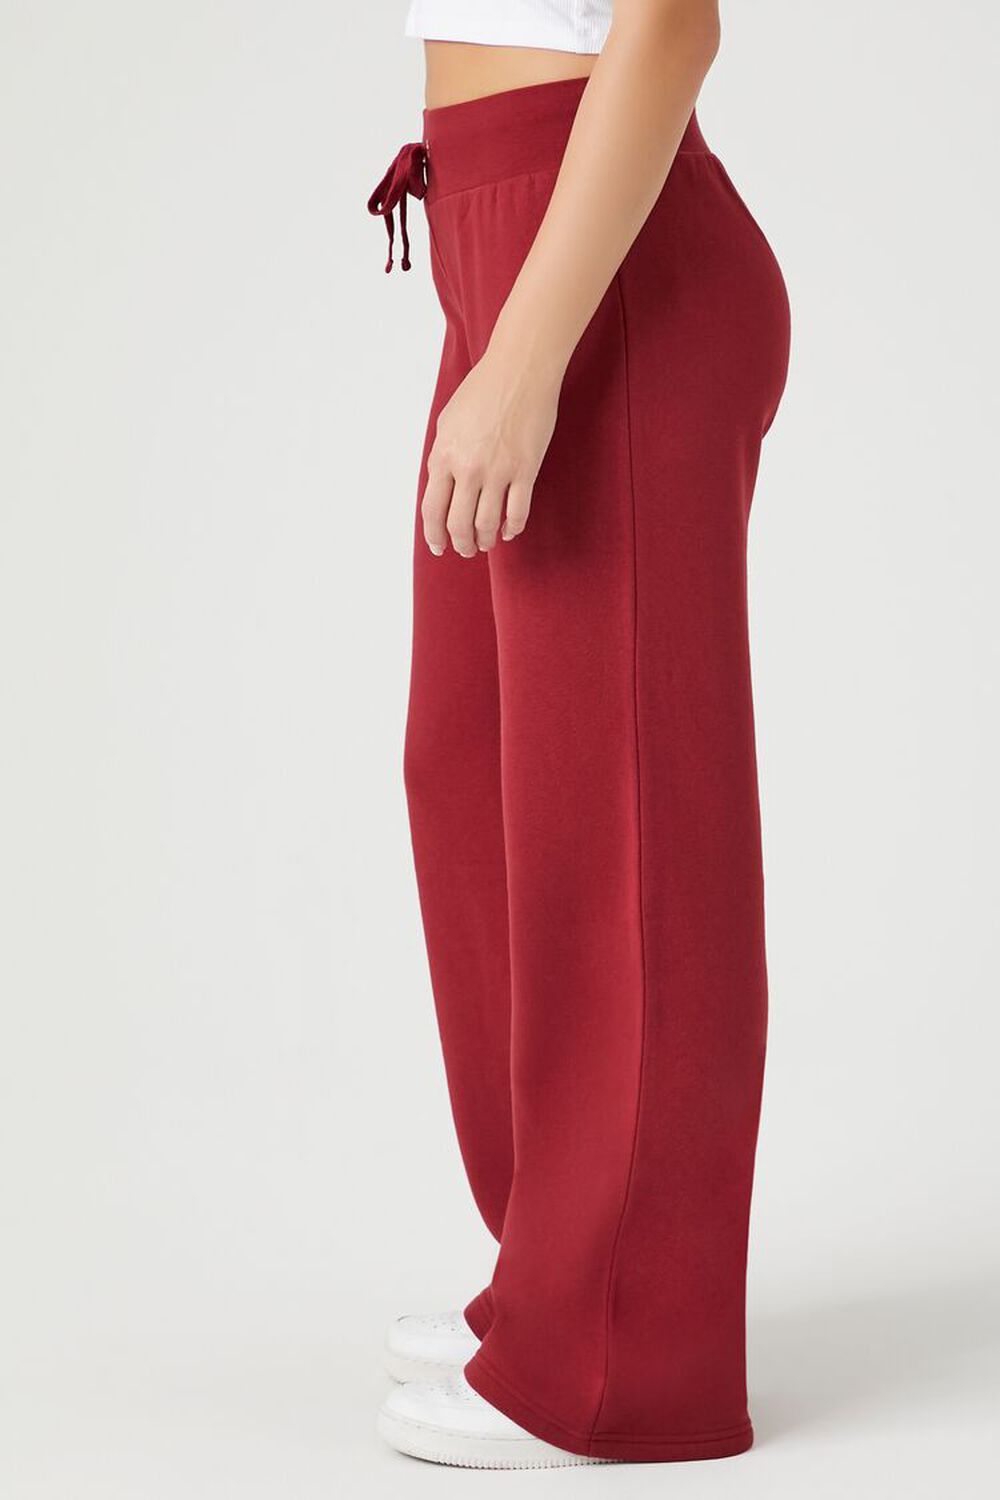 Faherty Women's Red Chevron Drawstring Sweatpants Size Small